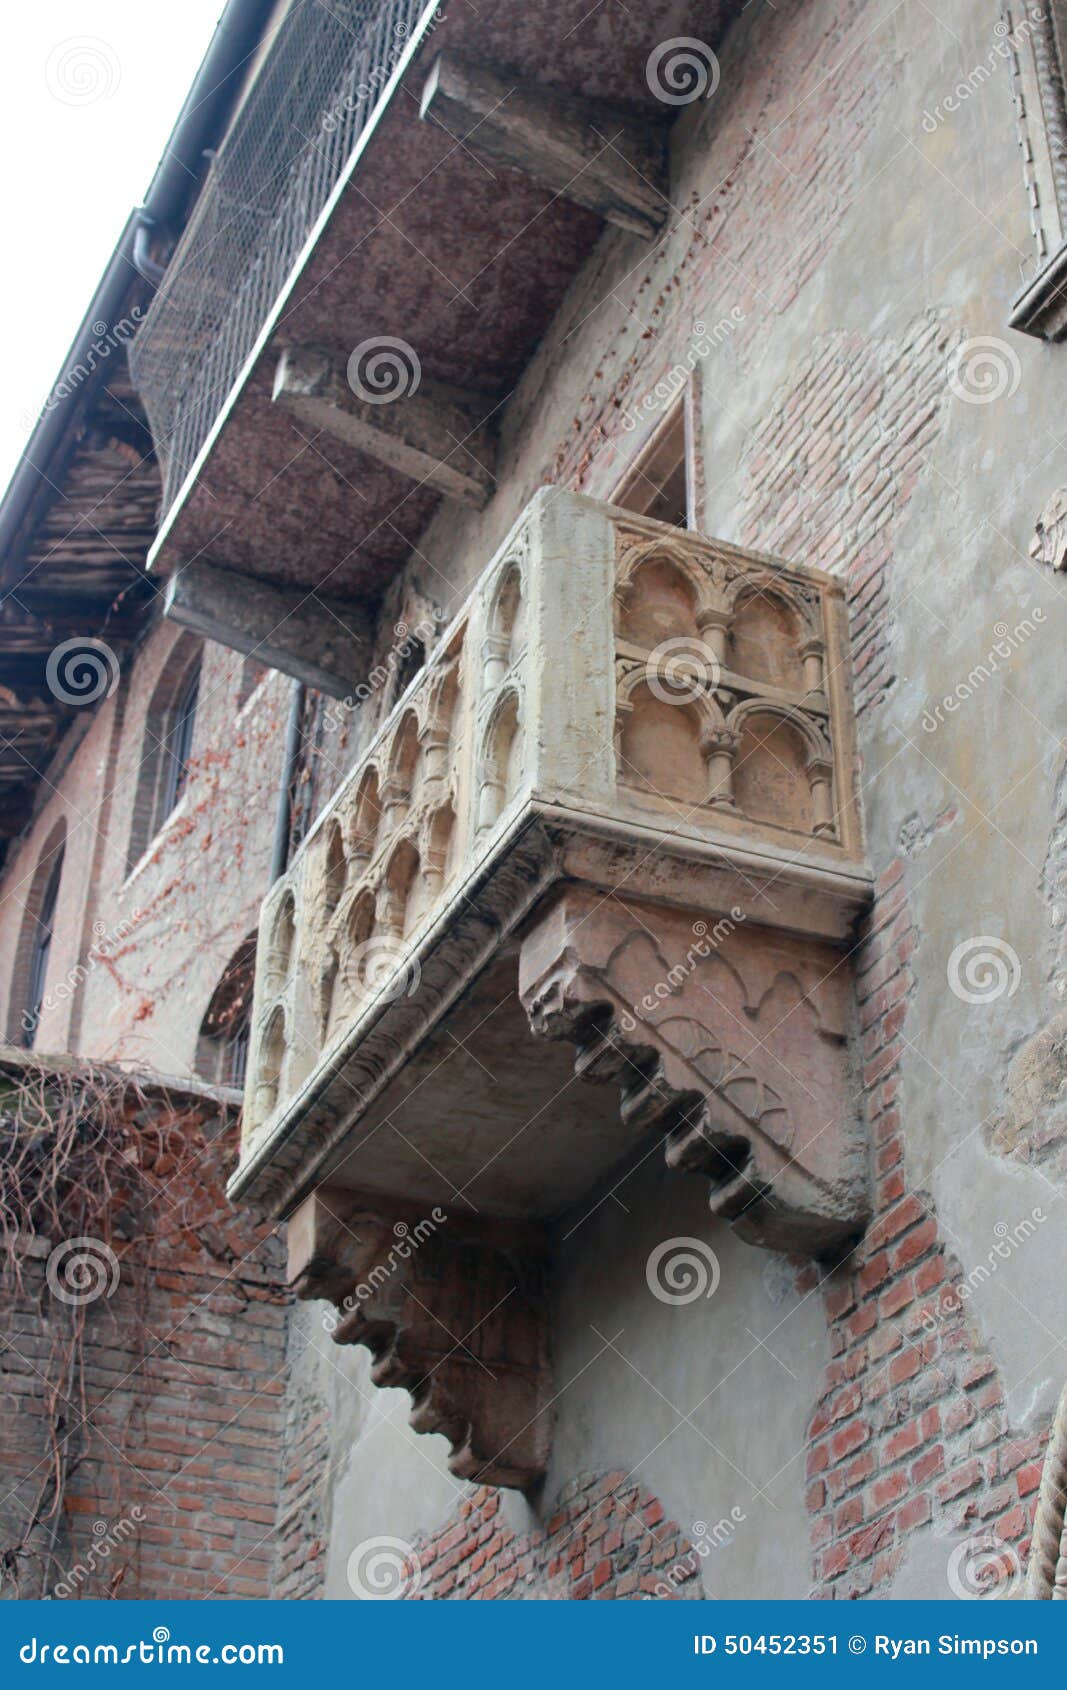 juliet's balcony (casa di giulietta)